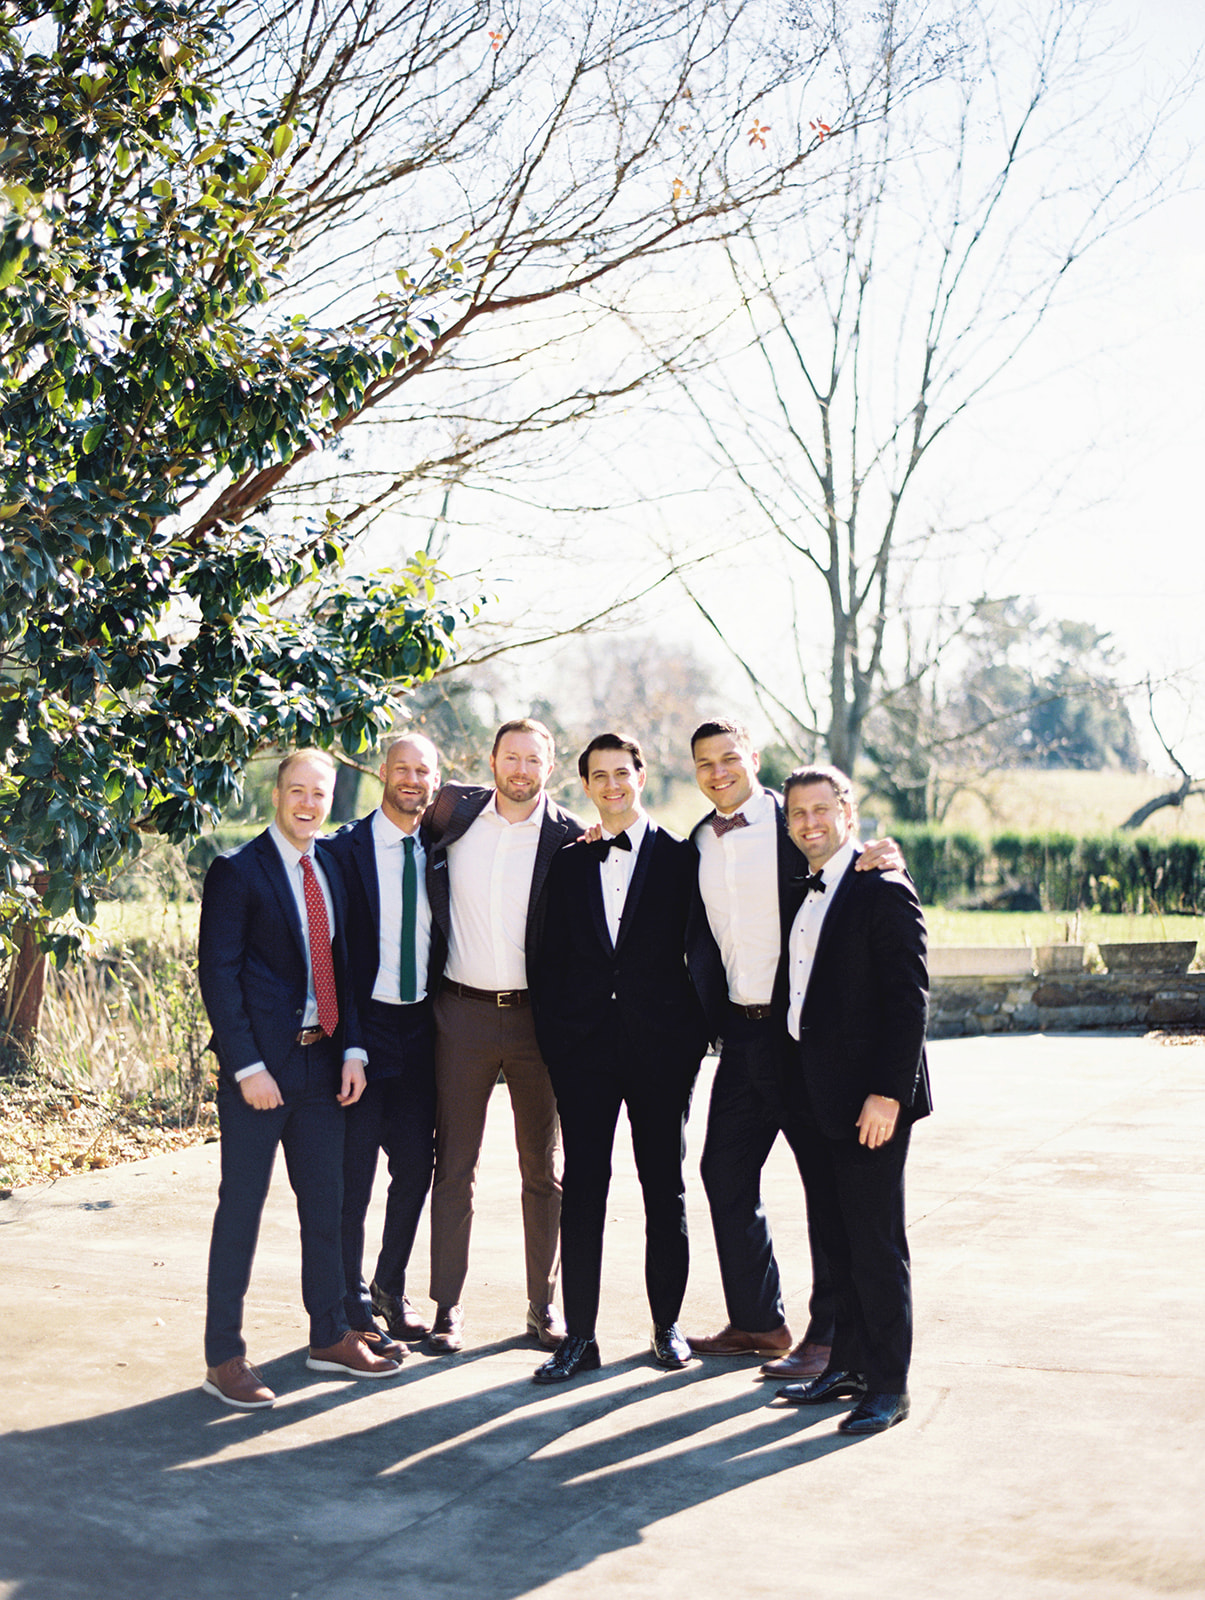 groomsmen pictures blue tux black tux black and white tux brown slacks elegant wedding pictures brown tie green tie